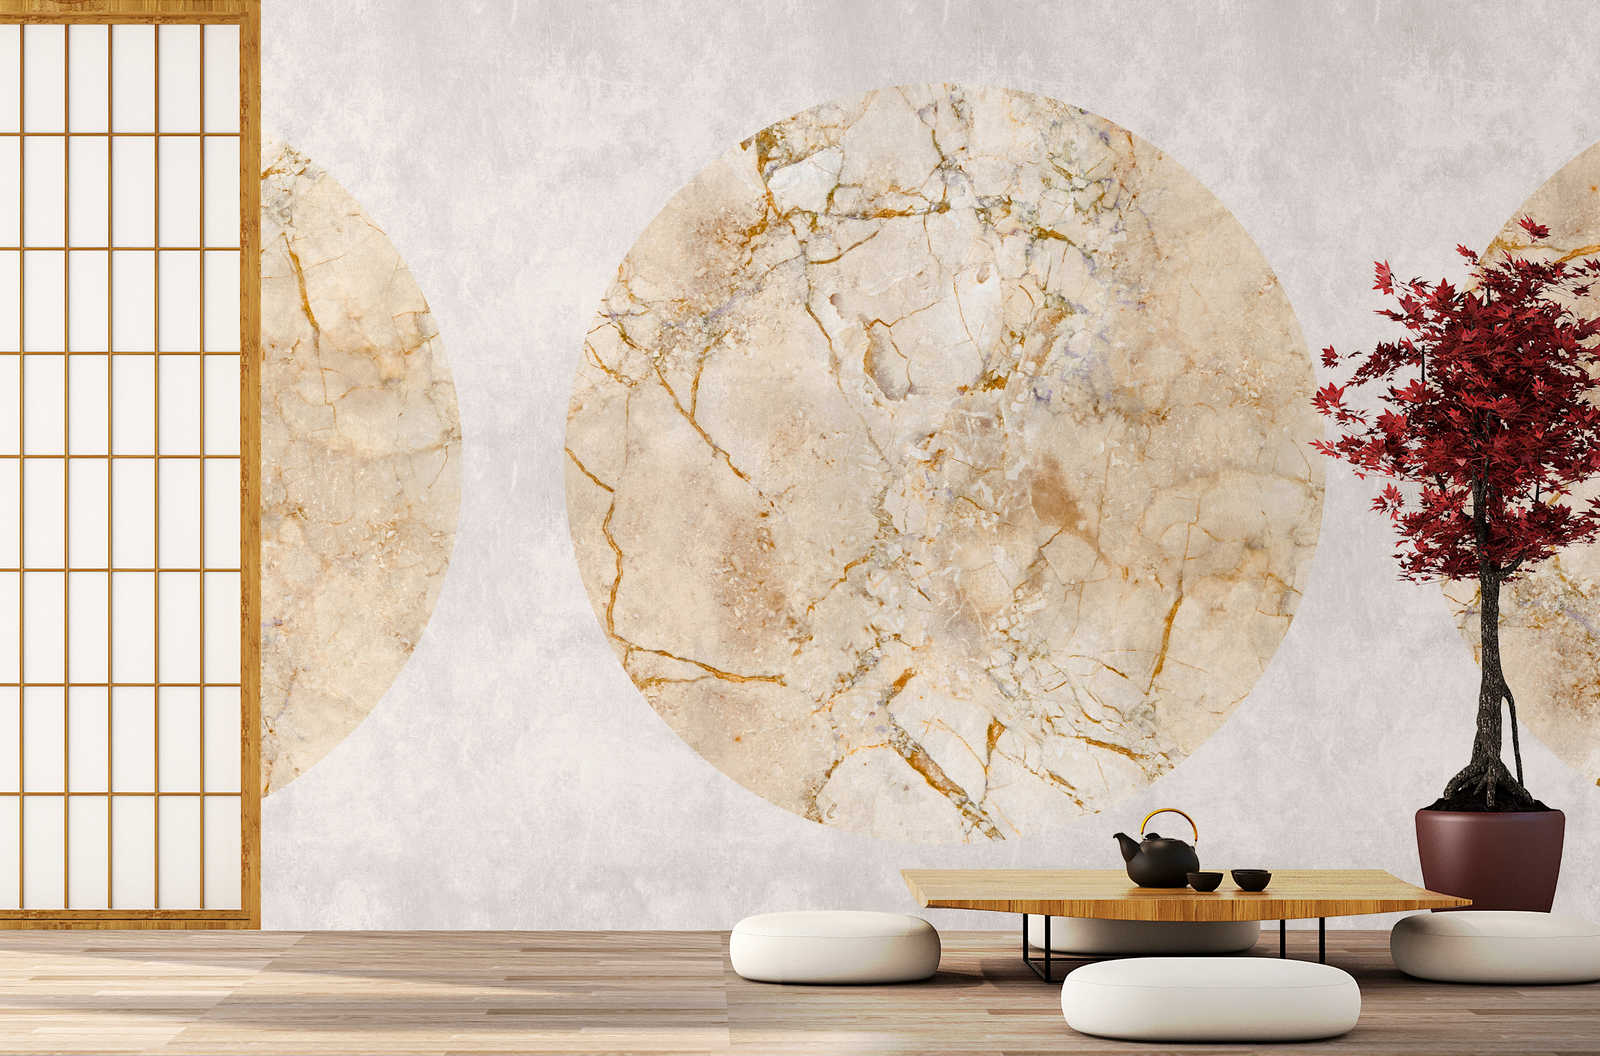             Venus 1 - photo wallpaper golden marble with circle motif & plaster optics
        